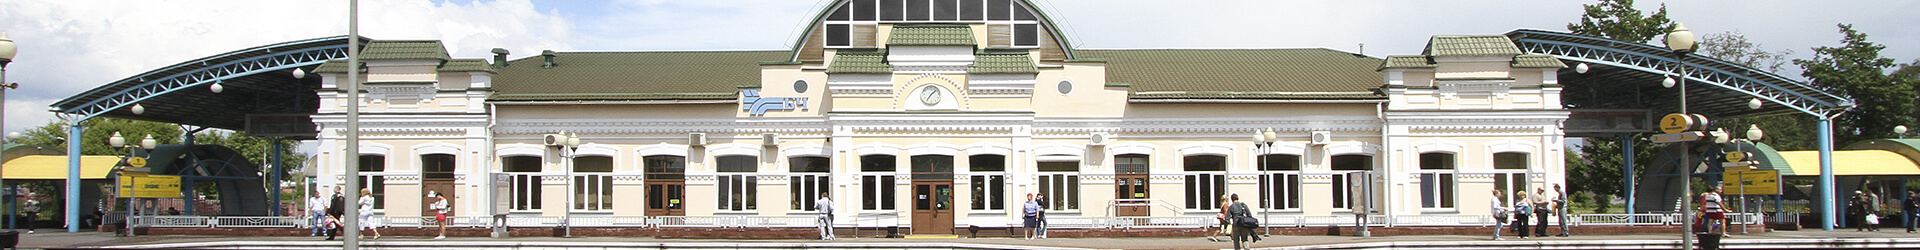 Babrujsk Railway Station